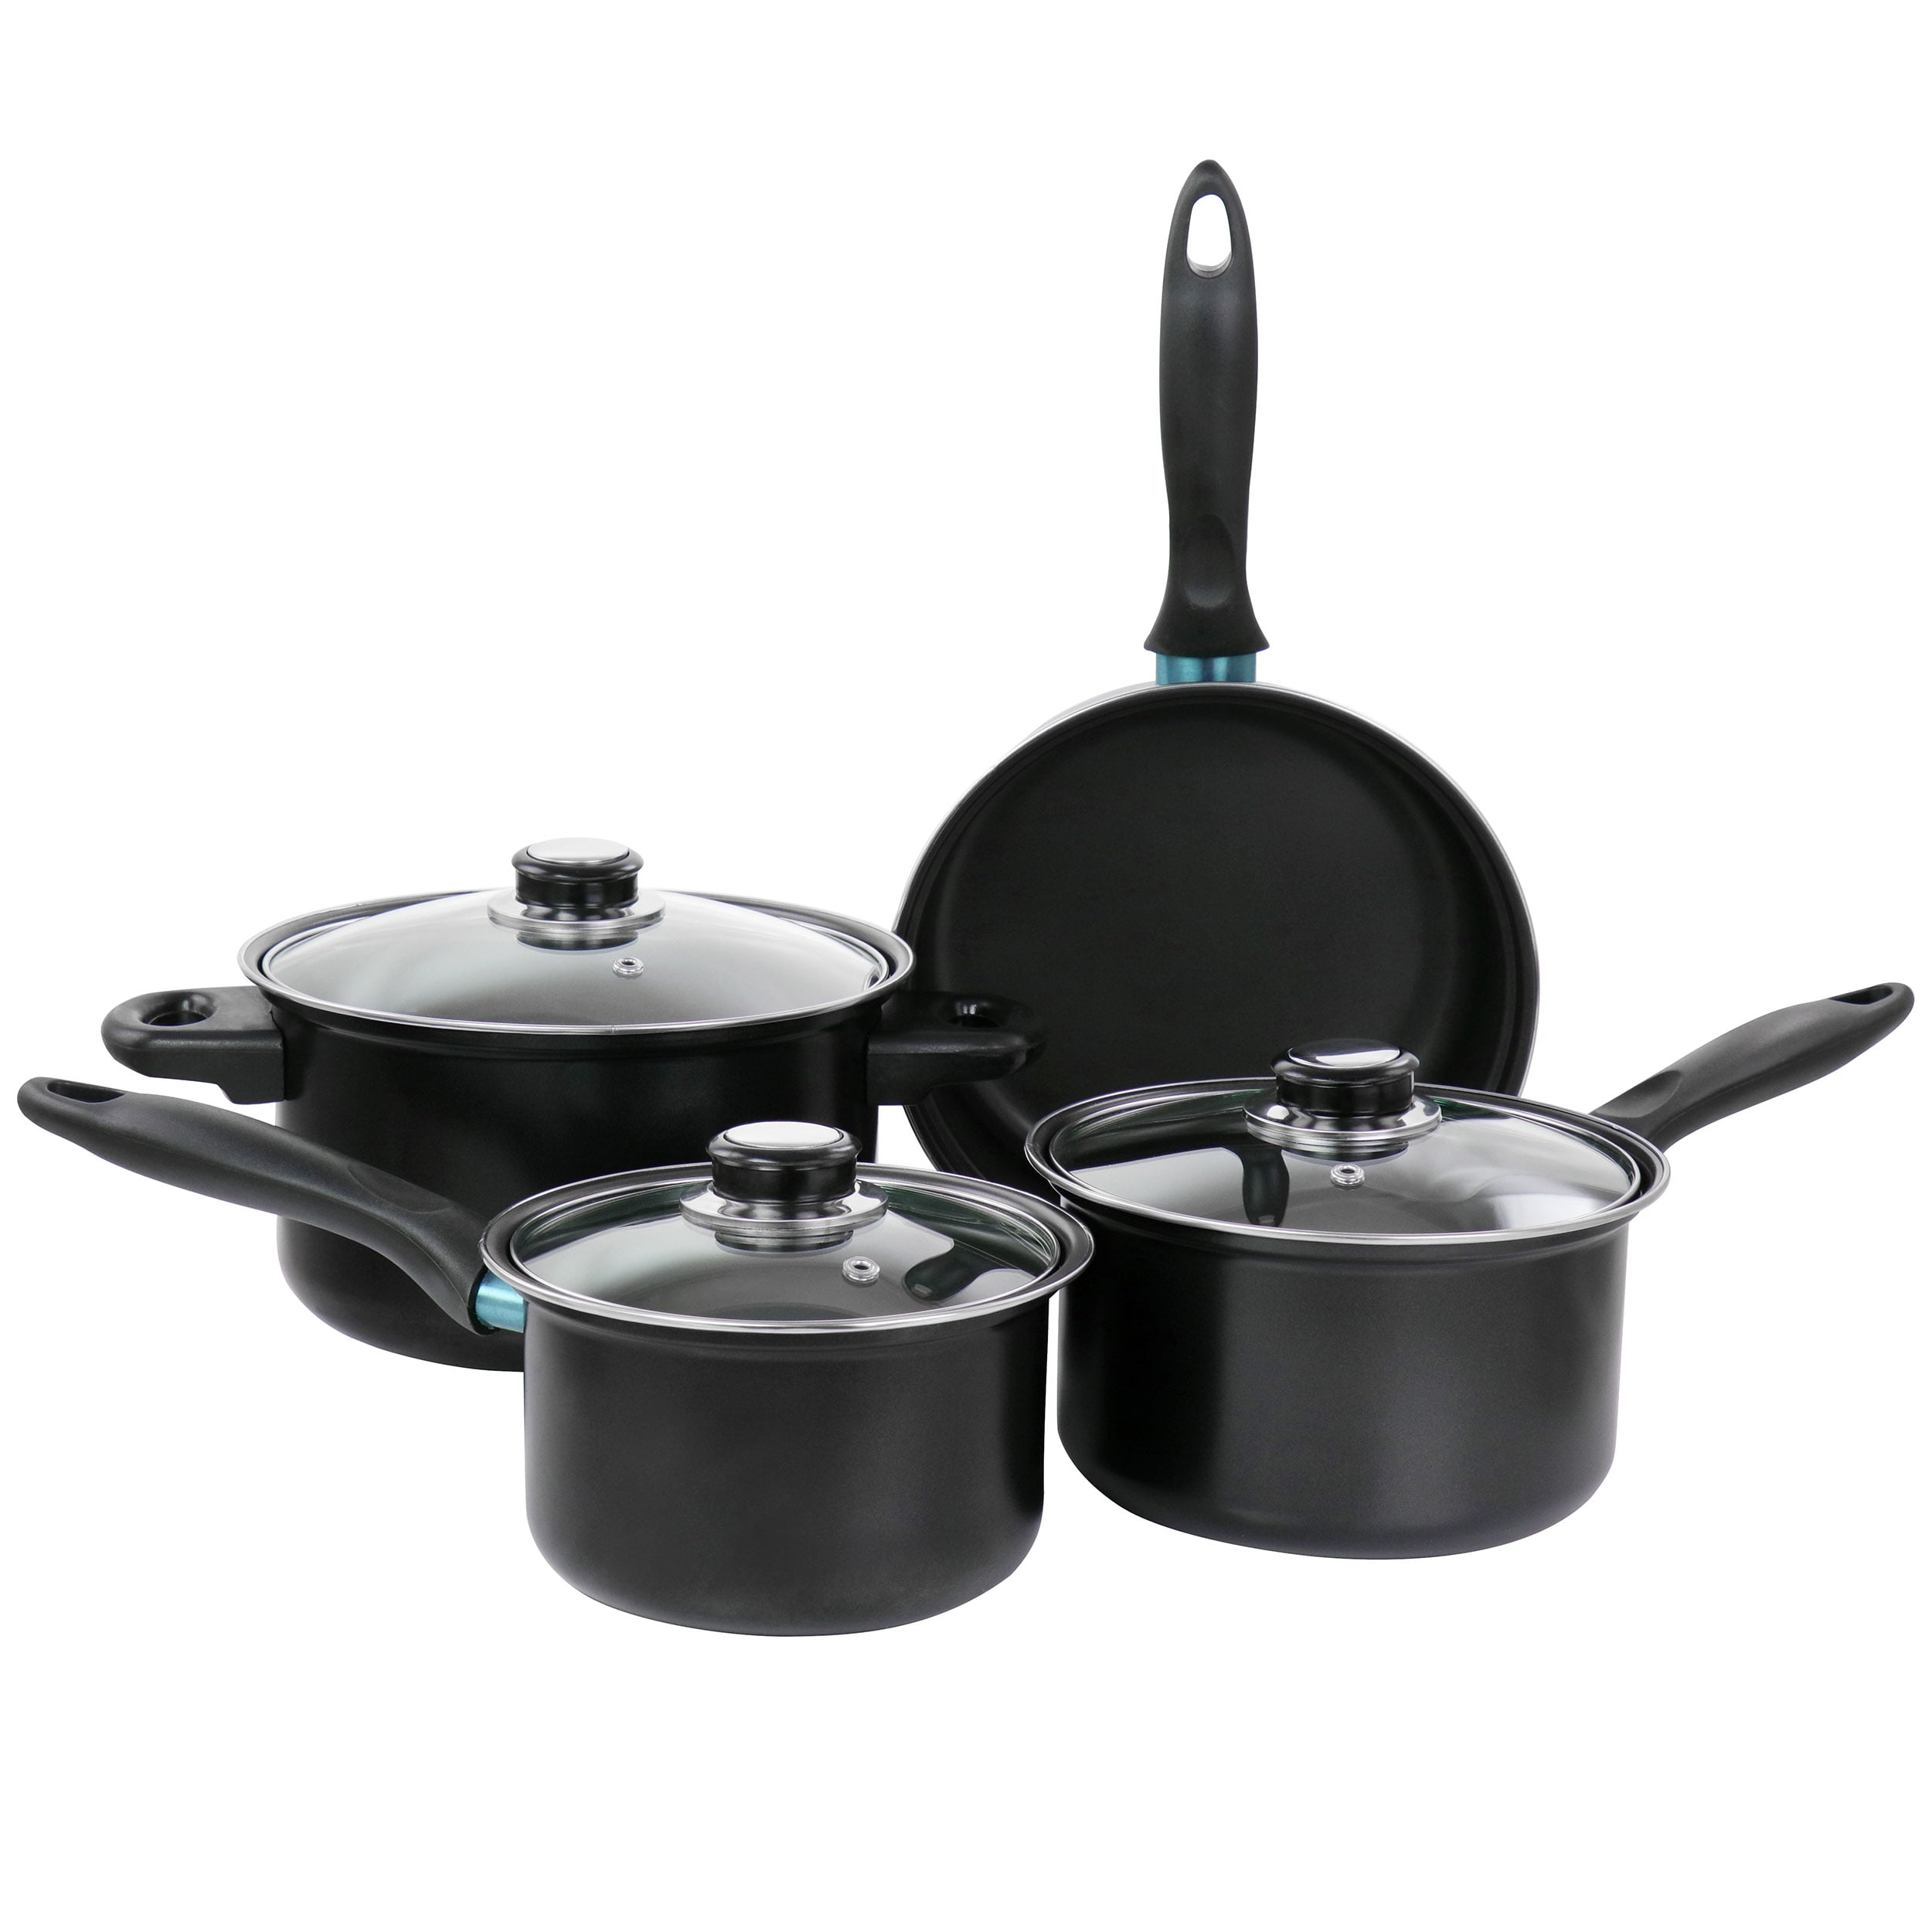 Black Steel, Carbon Steel Pots & Pans